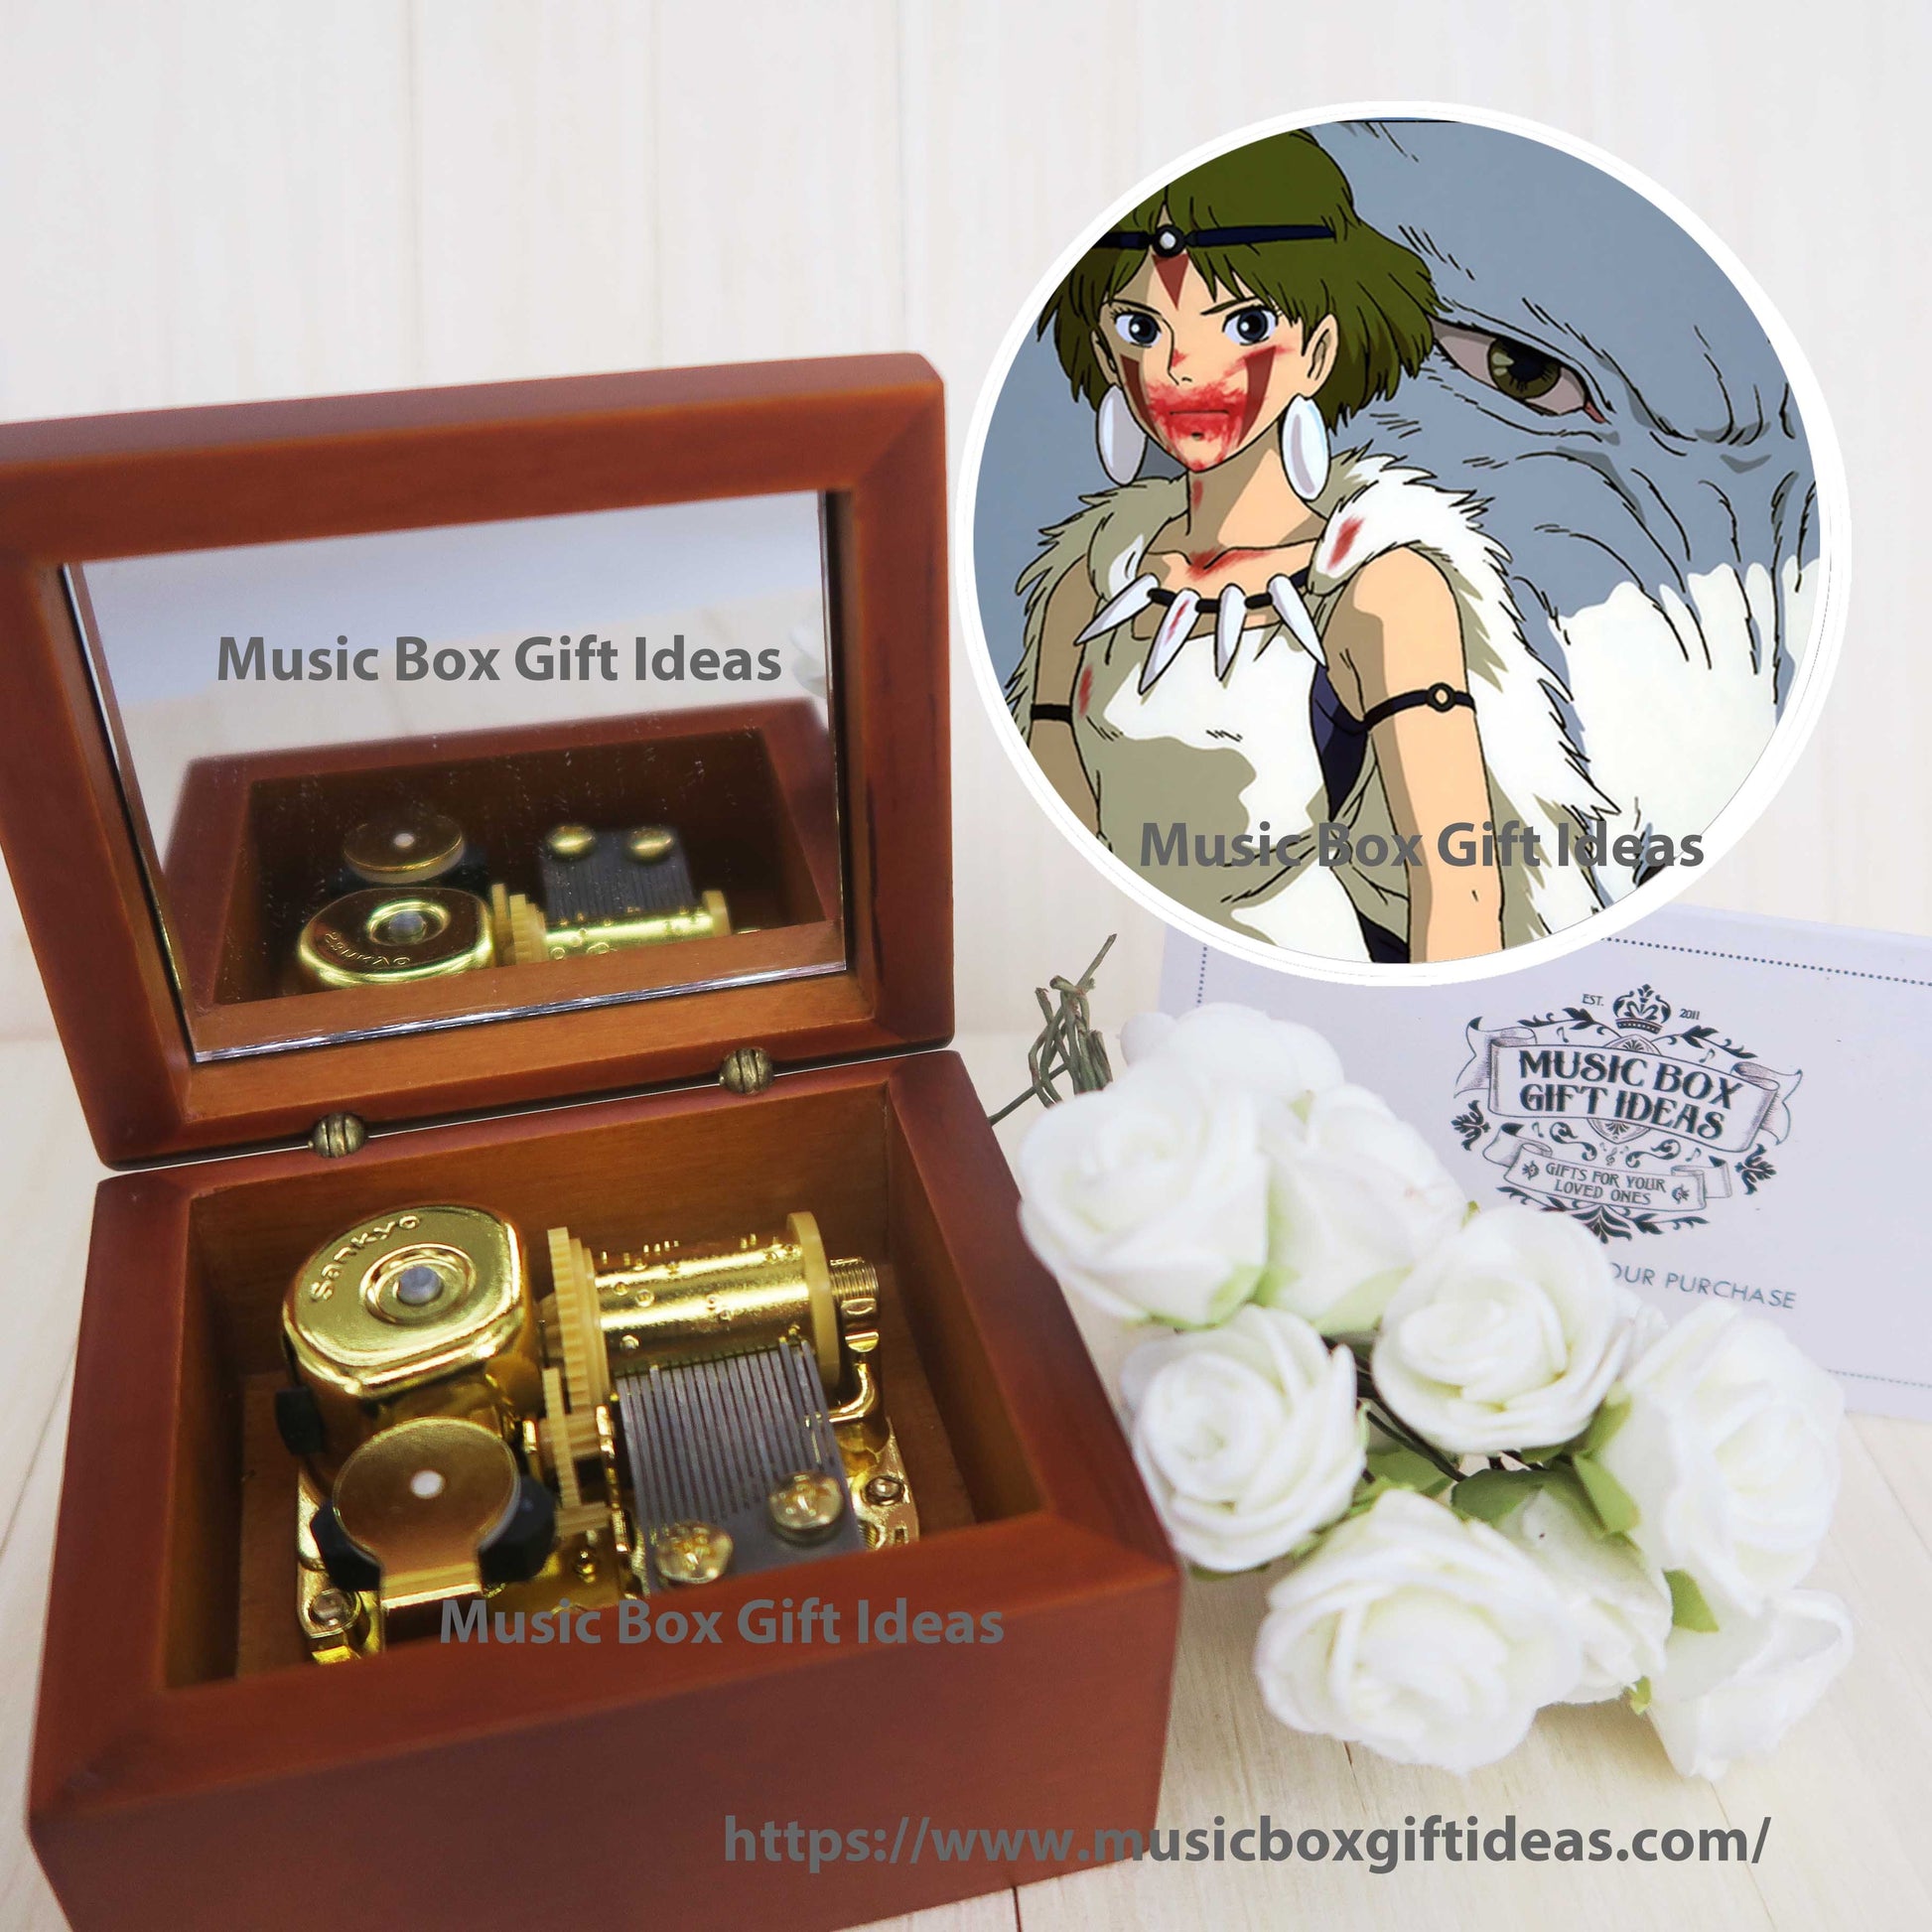 Princess Mononoke Legend of Ashitaka from Studio Ghibli 18-Note Music Box Gift (Wooden Clockwork) - Music Box Gift Ideas